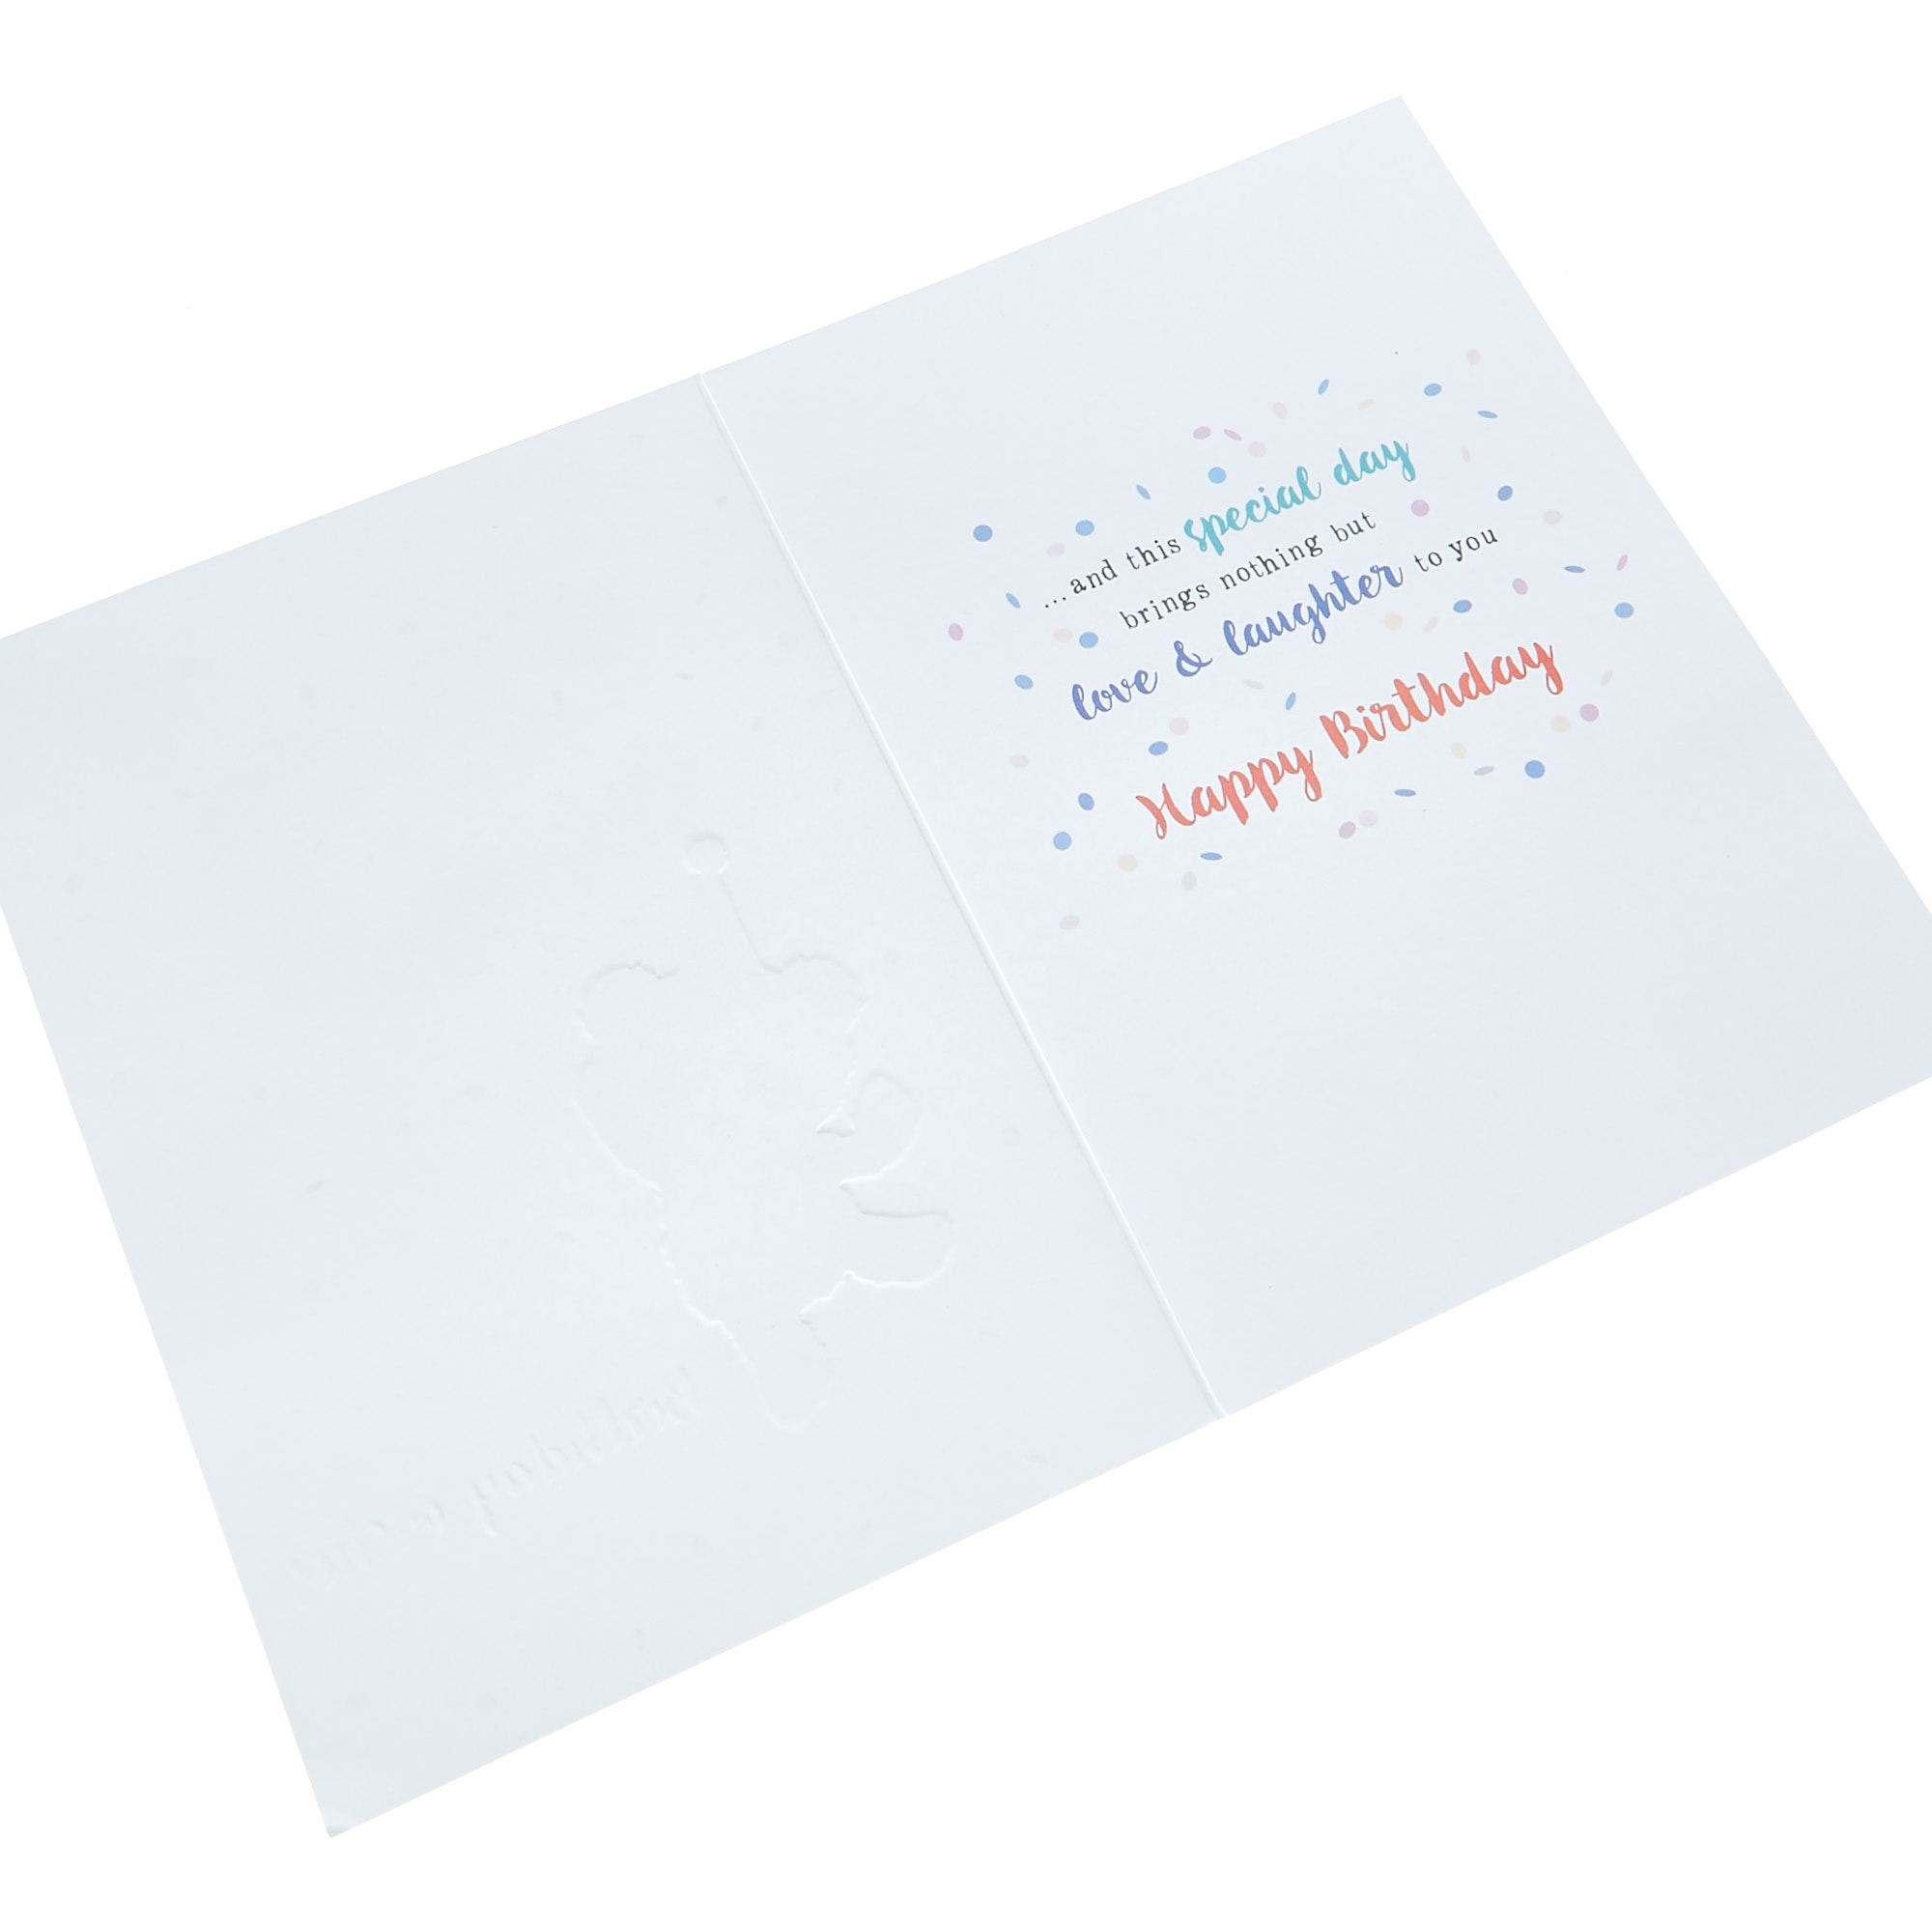 Buy 30th Birthday Card - Panda Balloons for GBP 0.89 | Card Factory UK